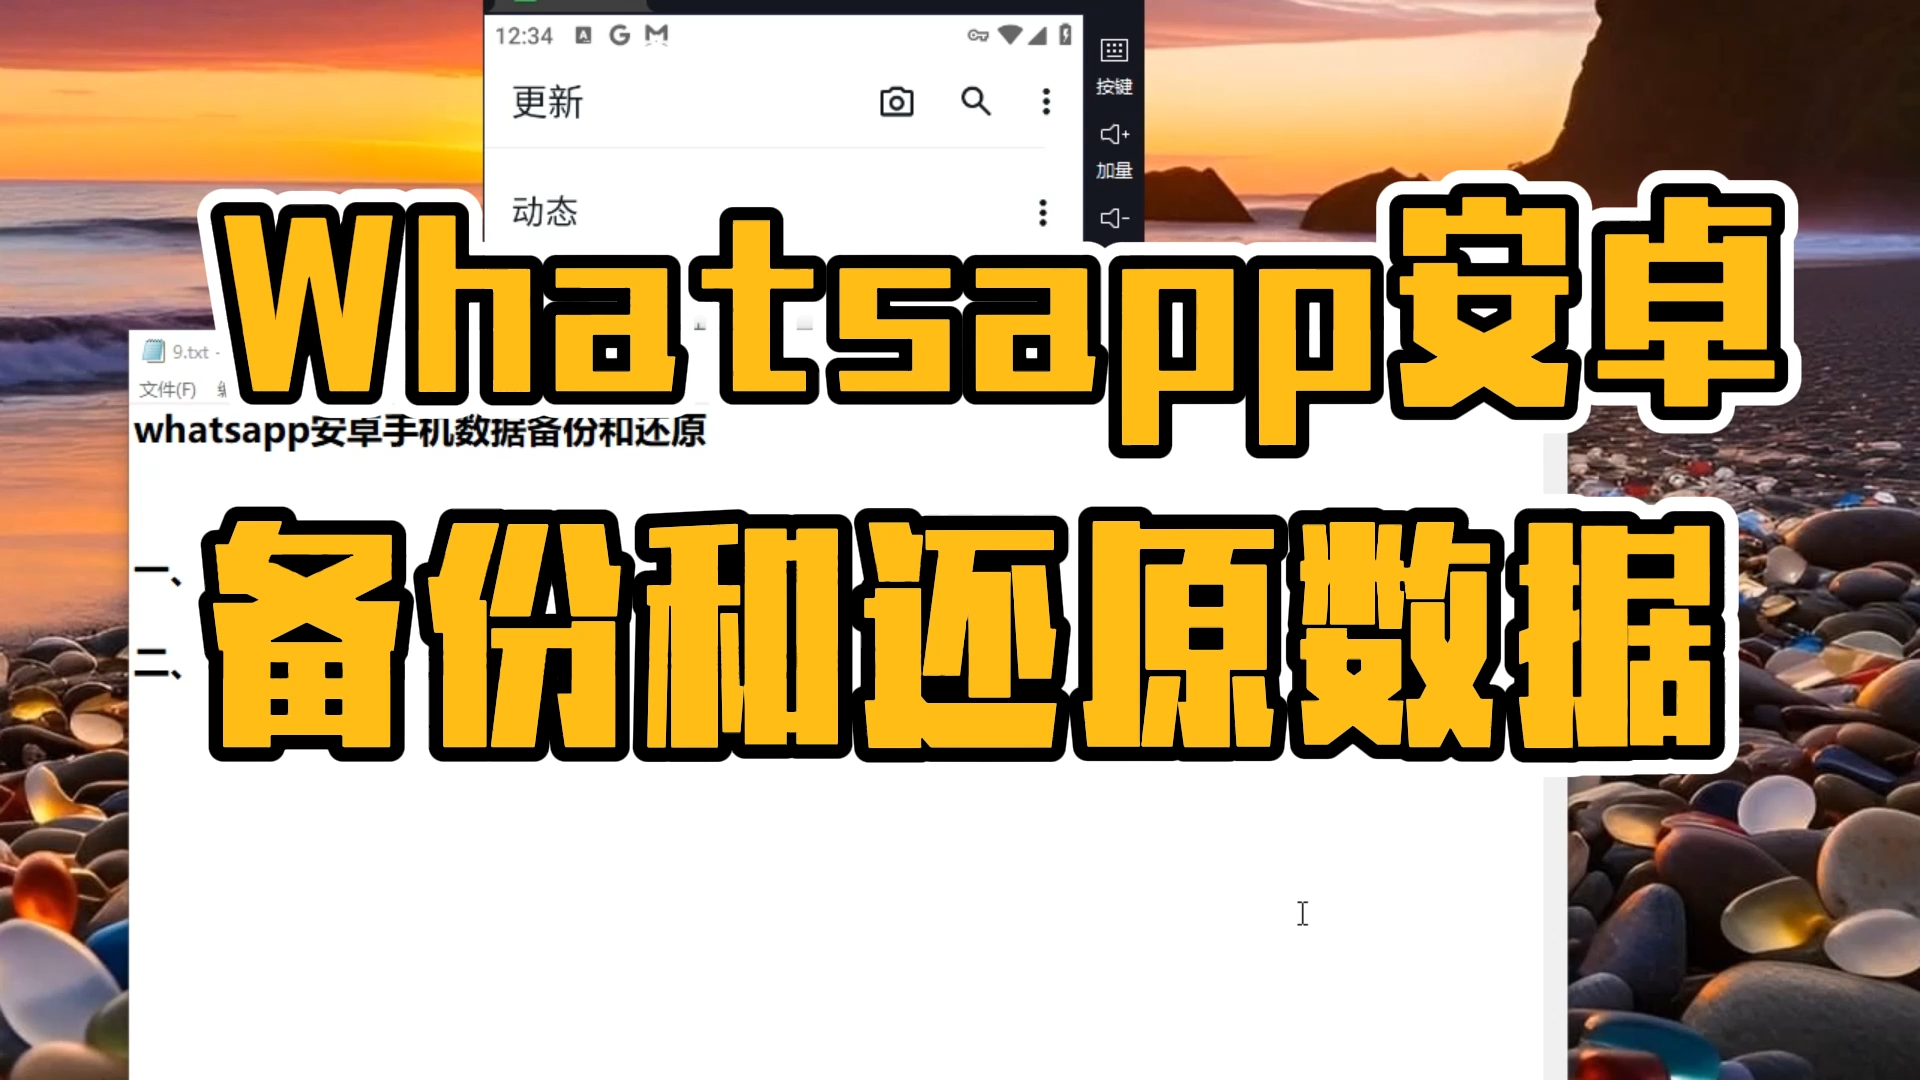 whatsapp官方中文正版-如何找到并下载 WhatsApp 官方中文正版？看